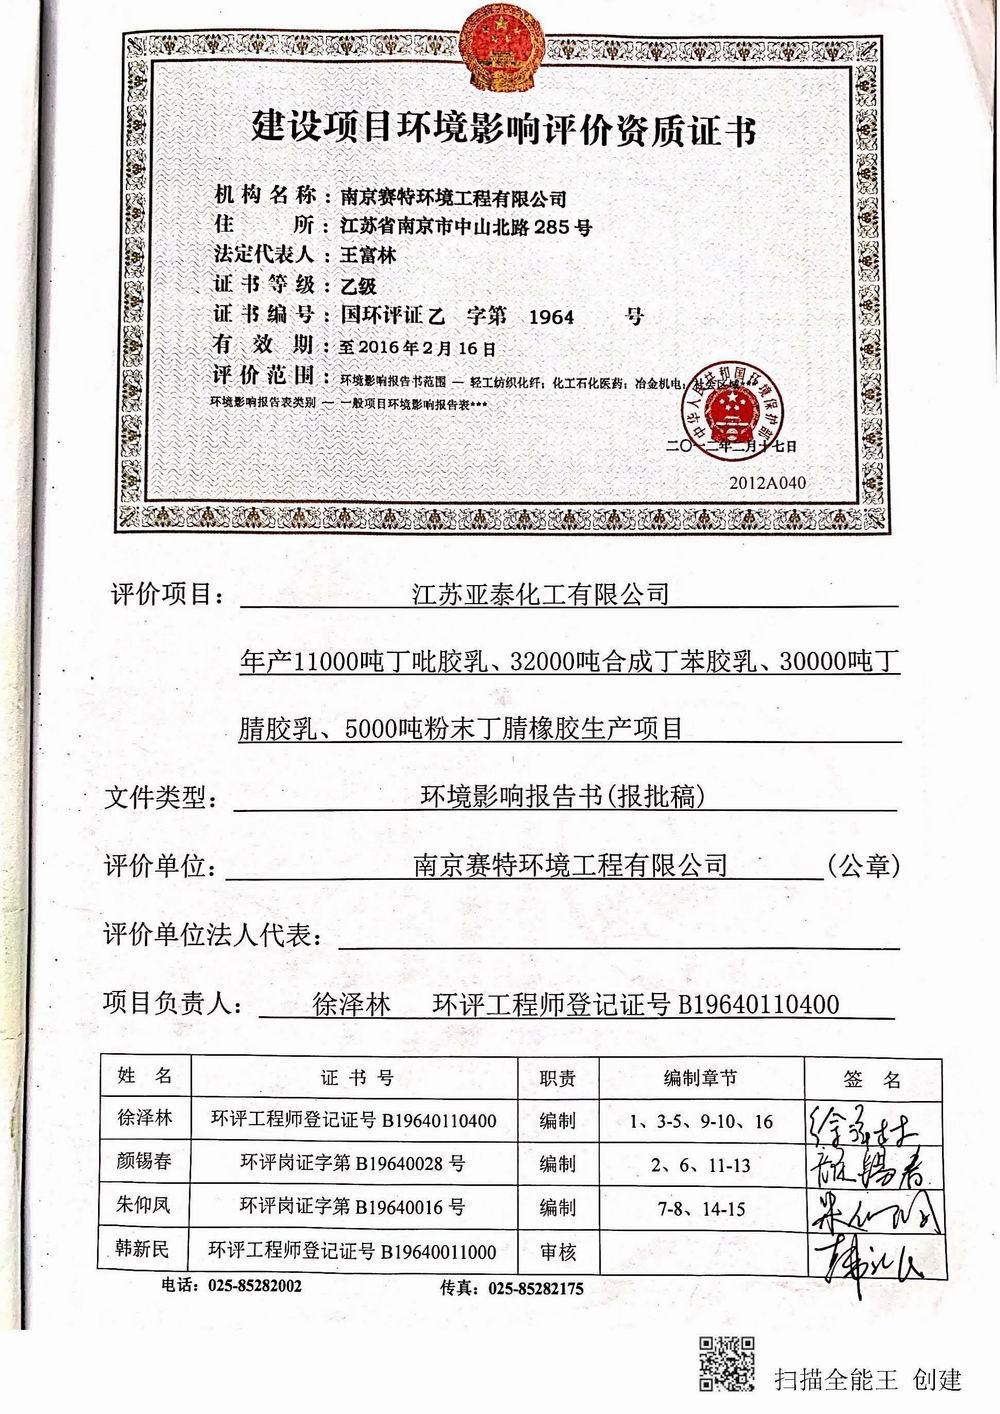 Jiangsu Yatai Chemical Co., Ltd. environmental basic information announced